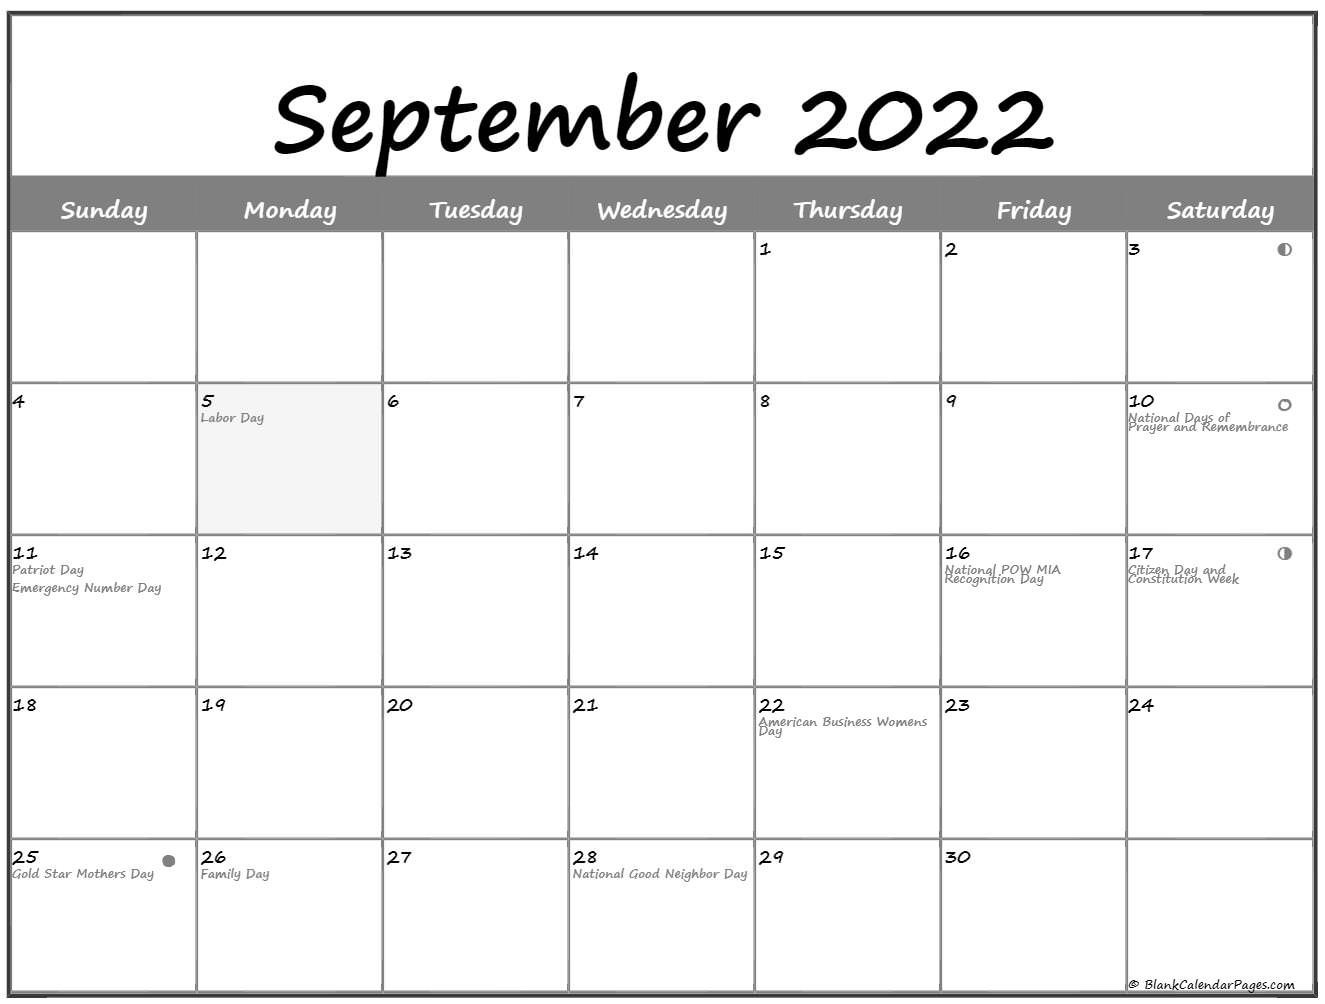 September 2022 Lunar Calendar | Moon Phase Calendar July 2021 Full Moon Calendar